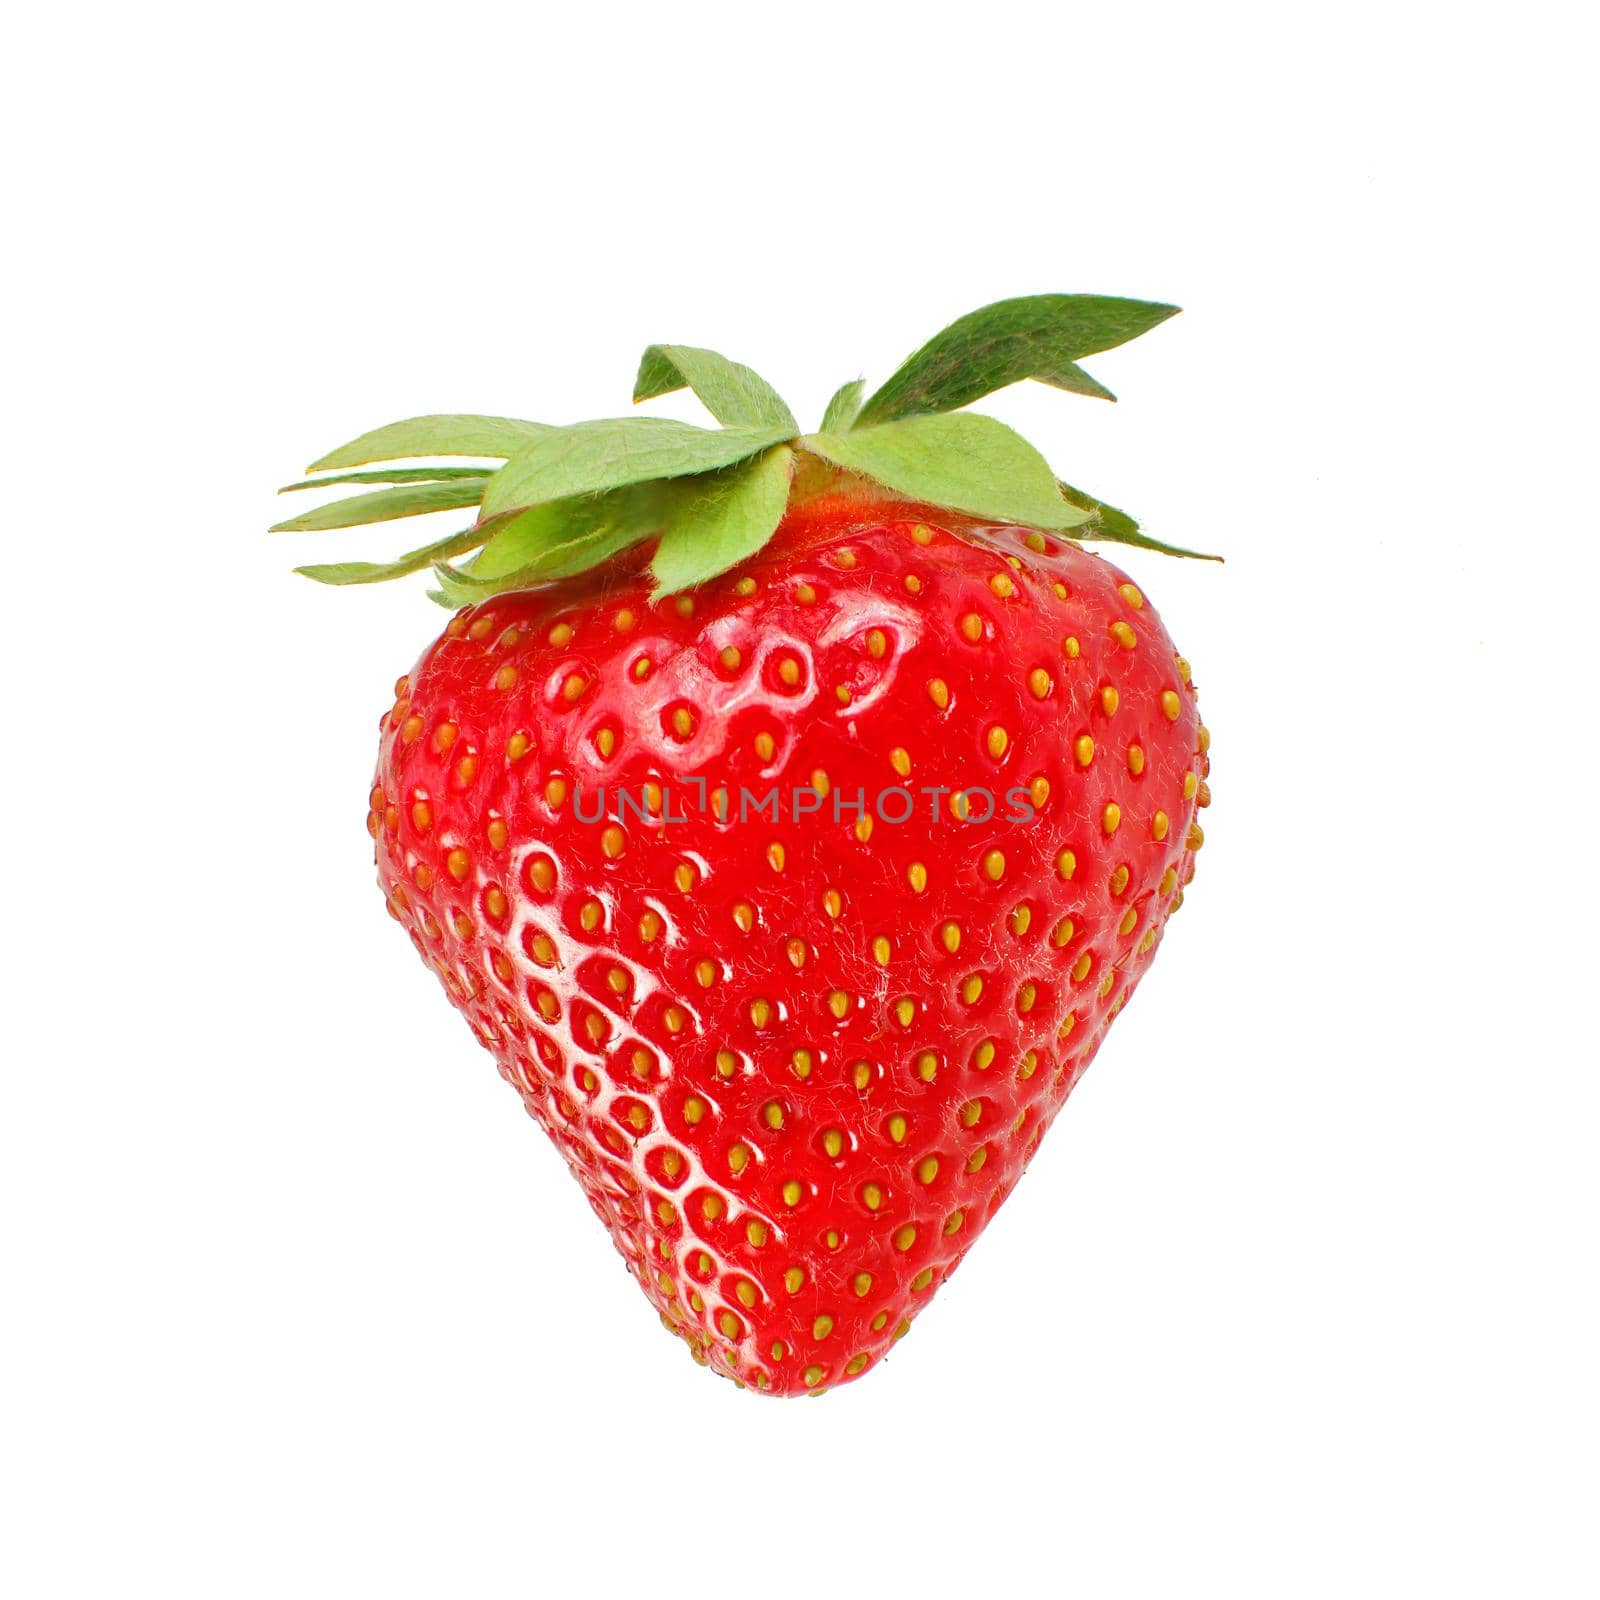 Single ripe strawberry isolated on white background. by Ivanko